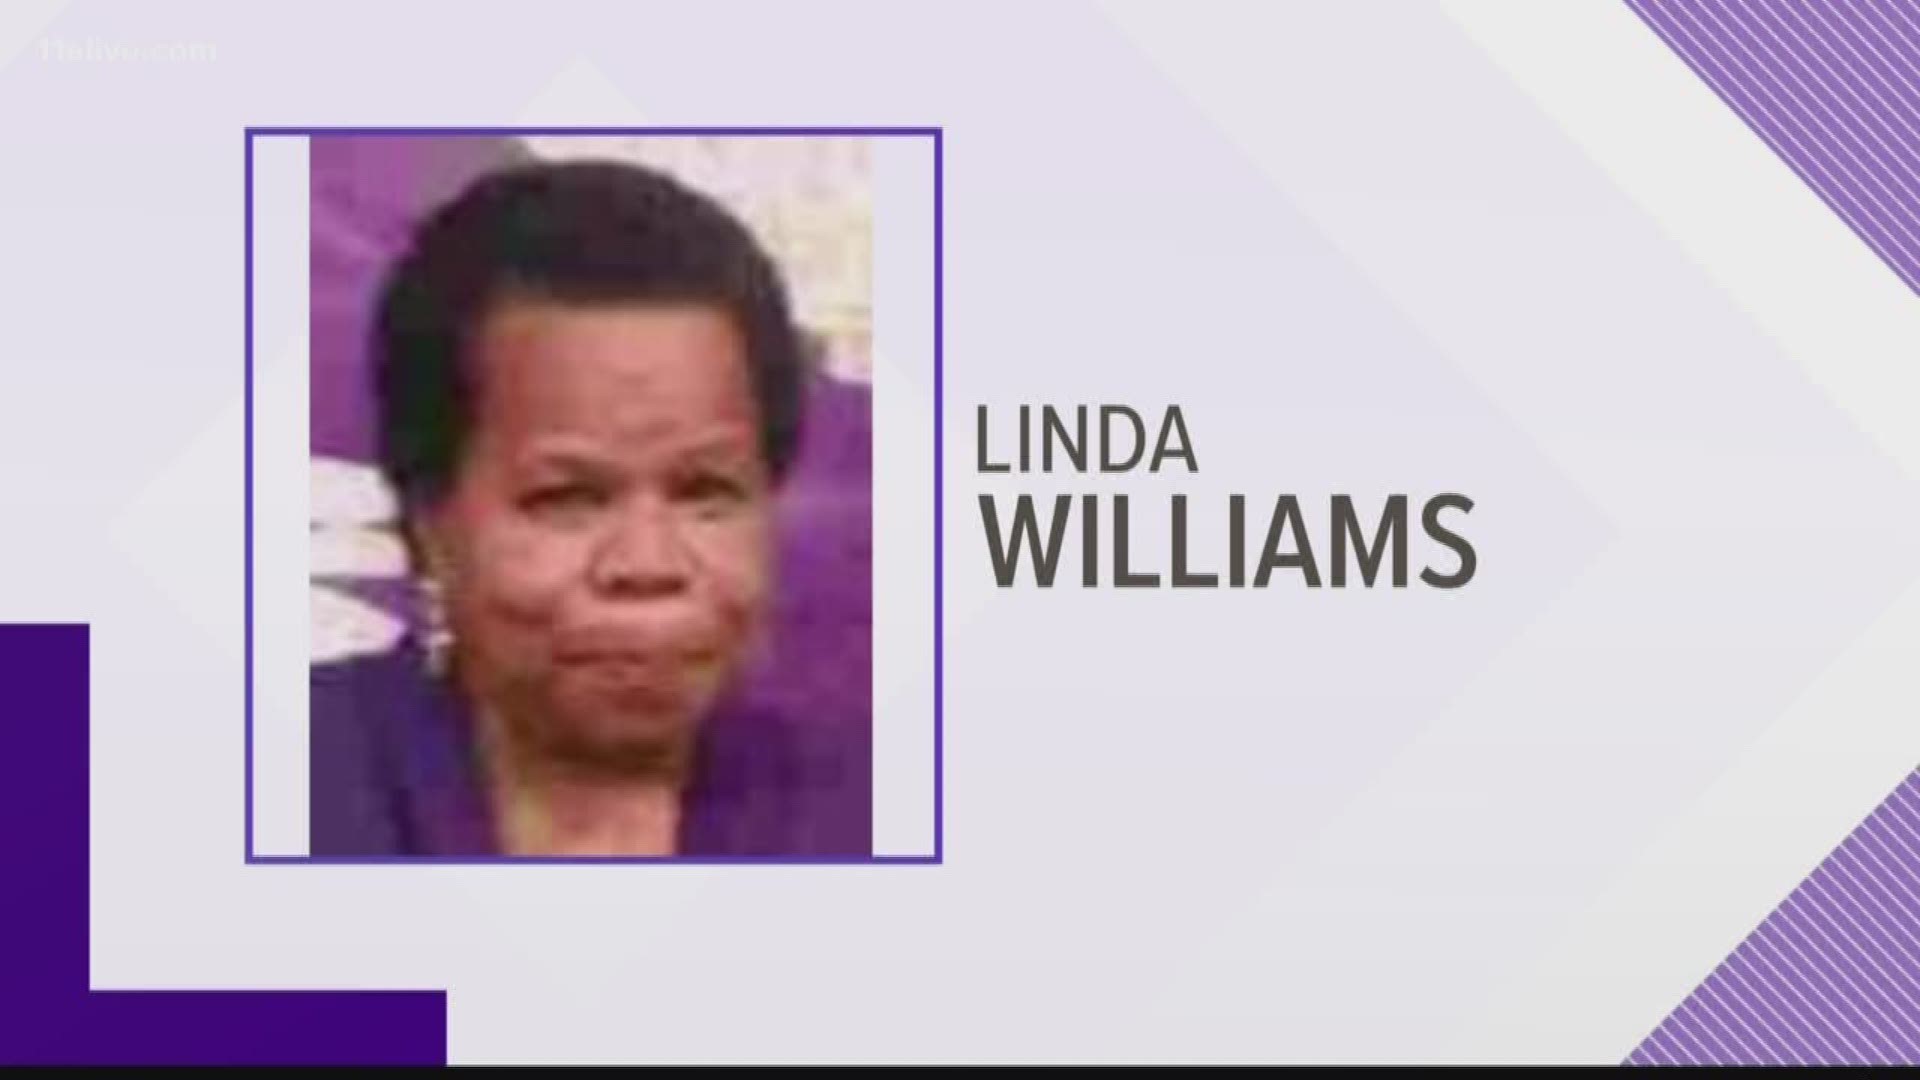 Linda Williams was found.